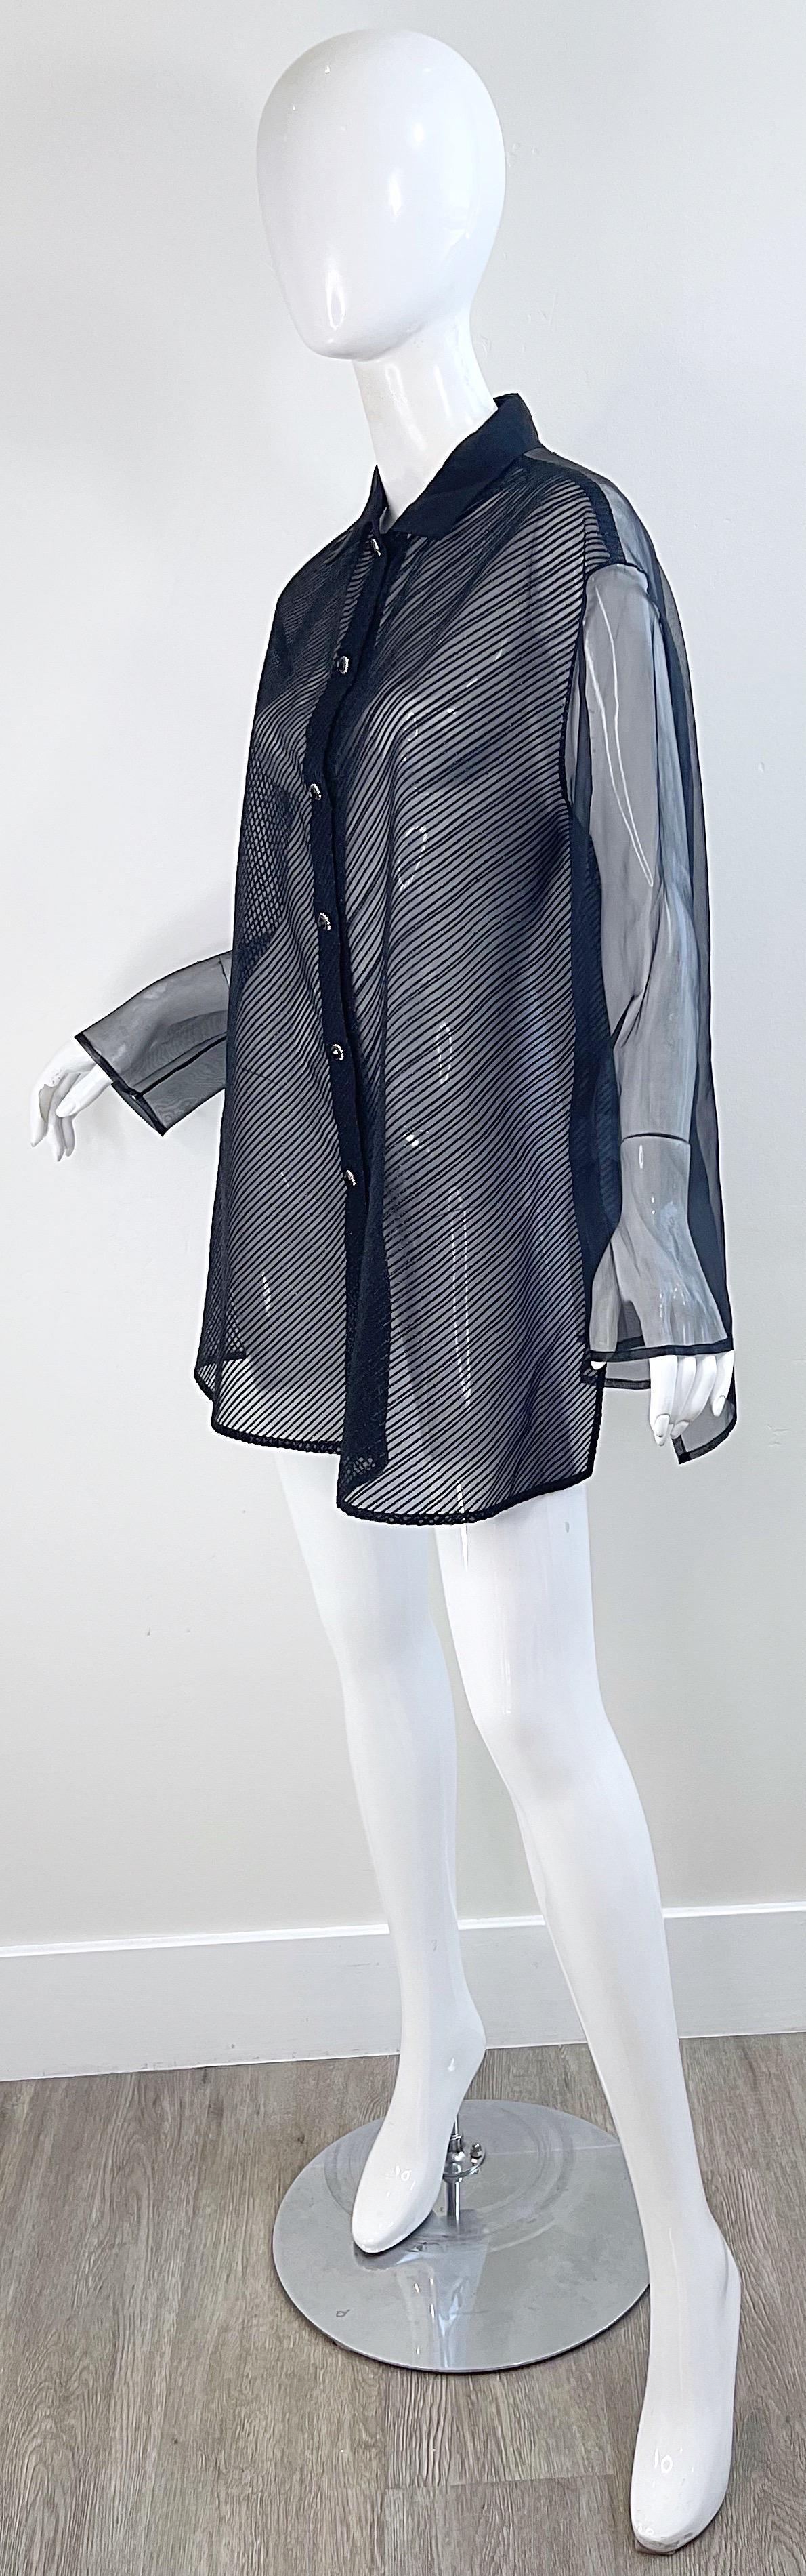 1990s Gianfranco Ferre Size 46 XL Black Sheer Silk Chiffon Blouse Vintage Shirt For Sale 9